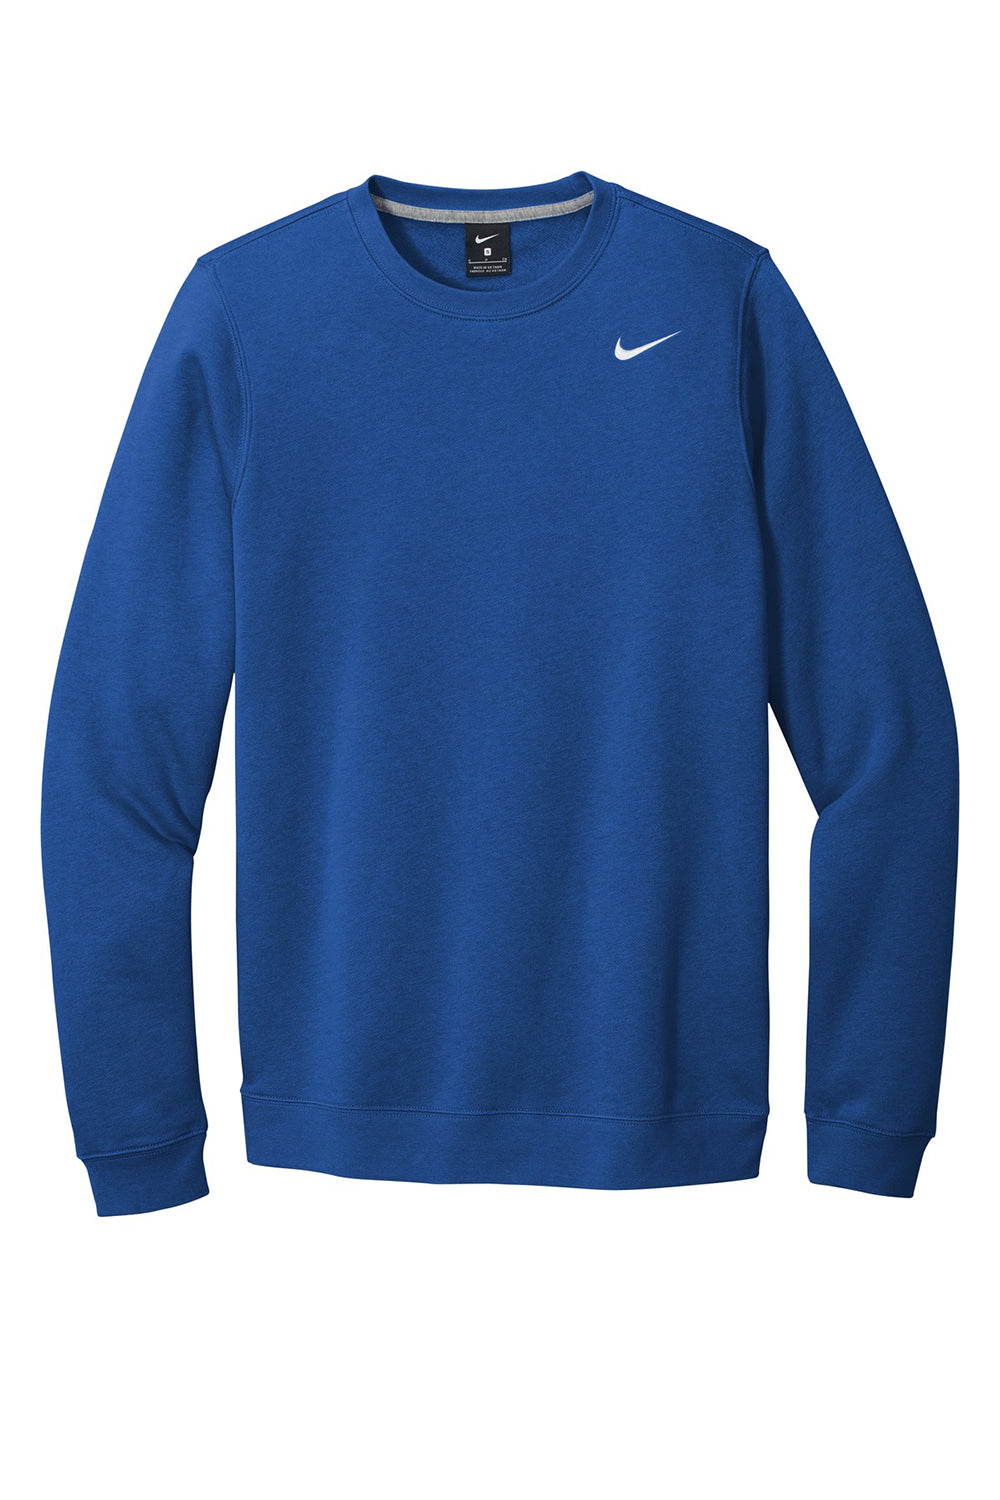 Nike CJ1614 Mens Club Fleece Crewneck Sweatshirt Royal Blue Flat Front